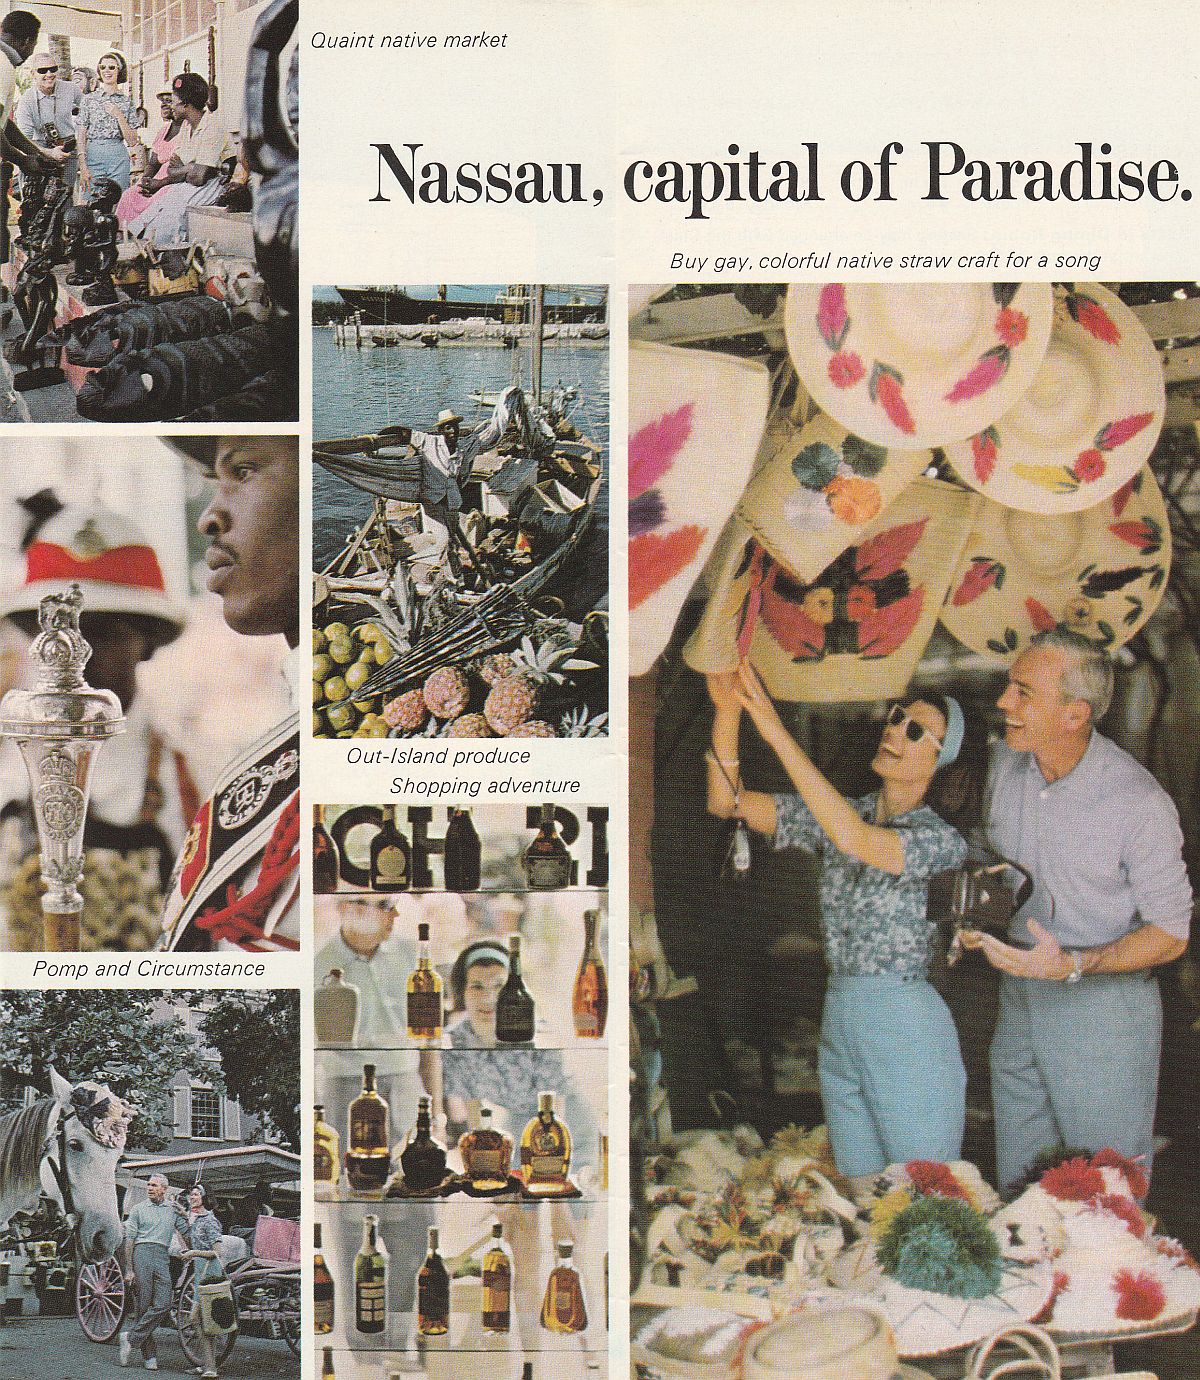 ss Bahama Star About Nassau (cont'd): Nassau, Capital of Paradise.